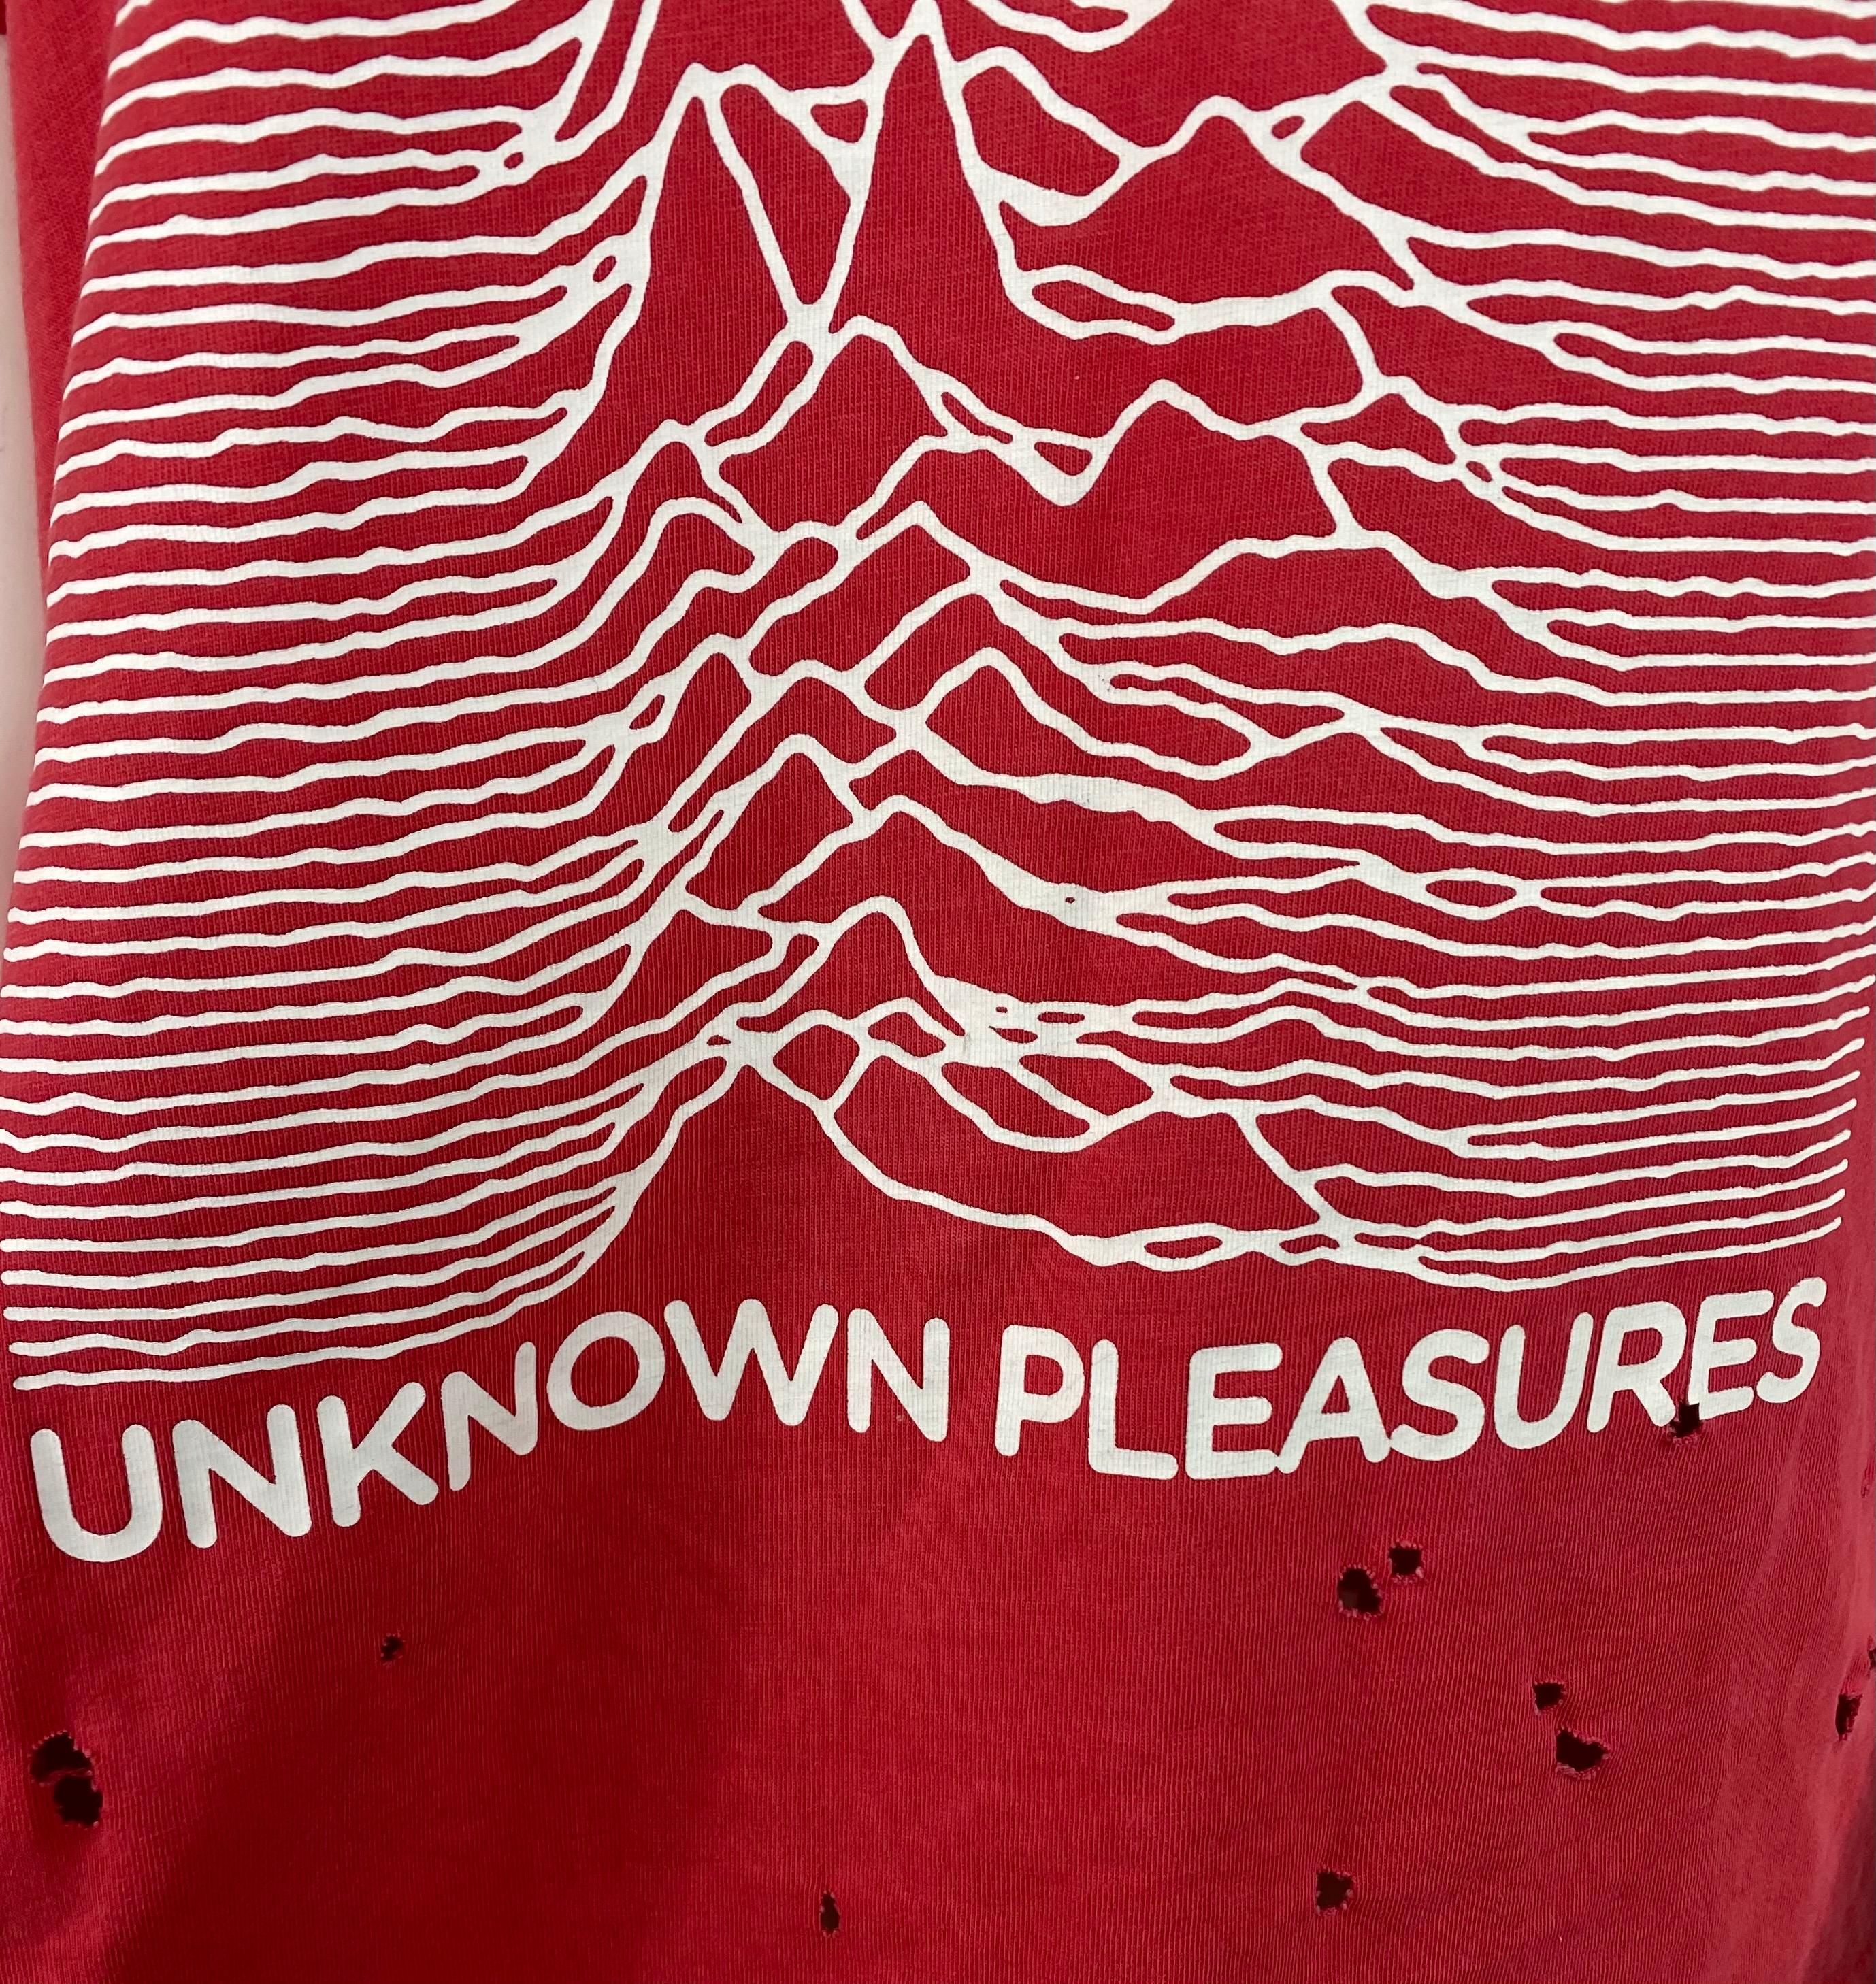 Product details:

The t-shirt features an album ('Unknown Pleasures